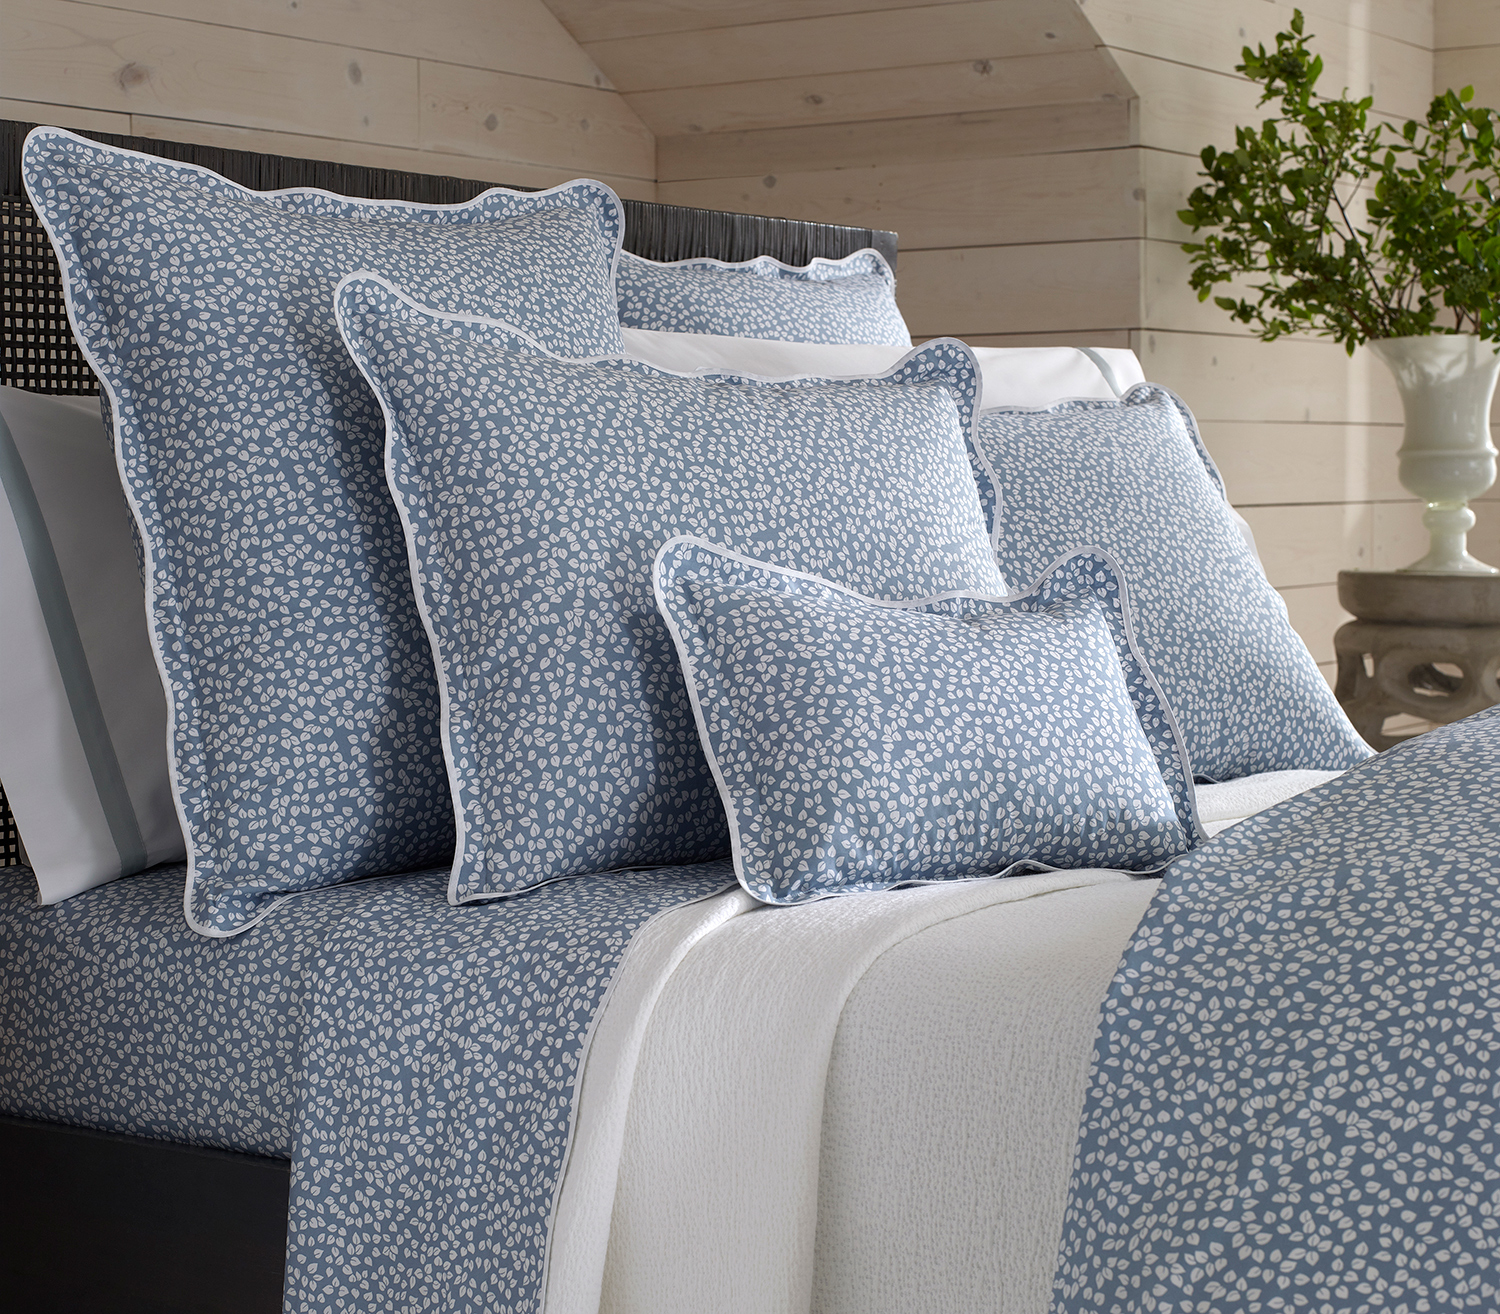 blue white patterned bedding